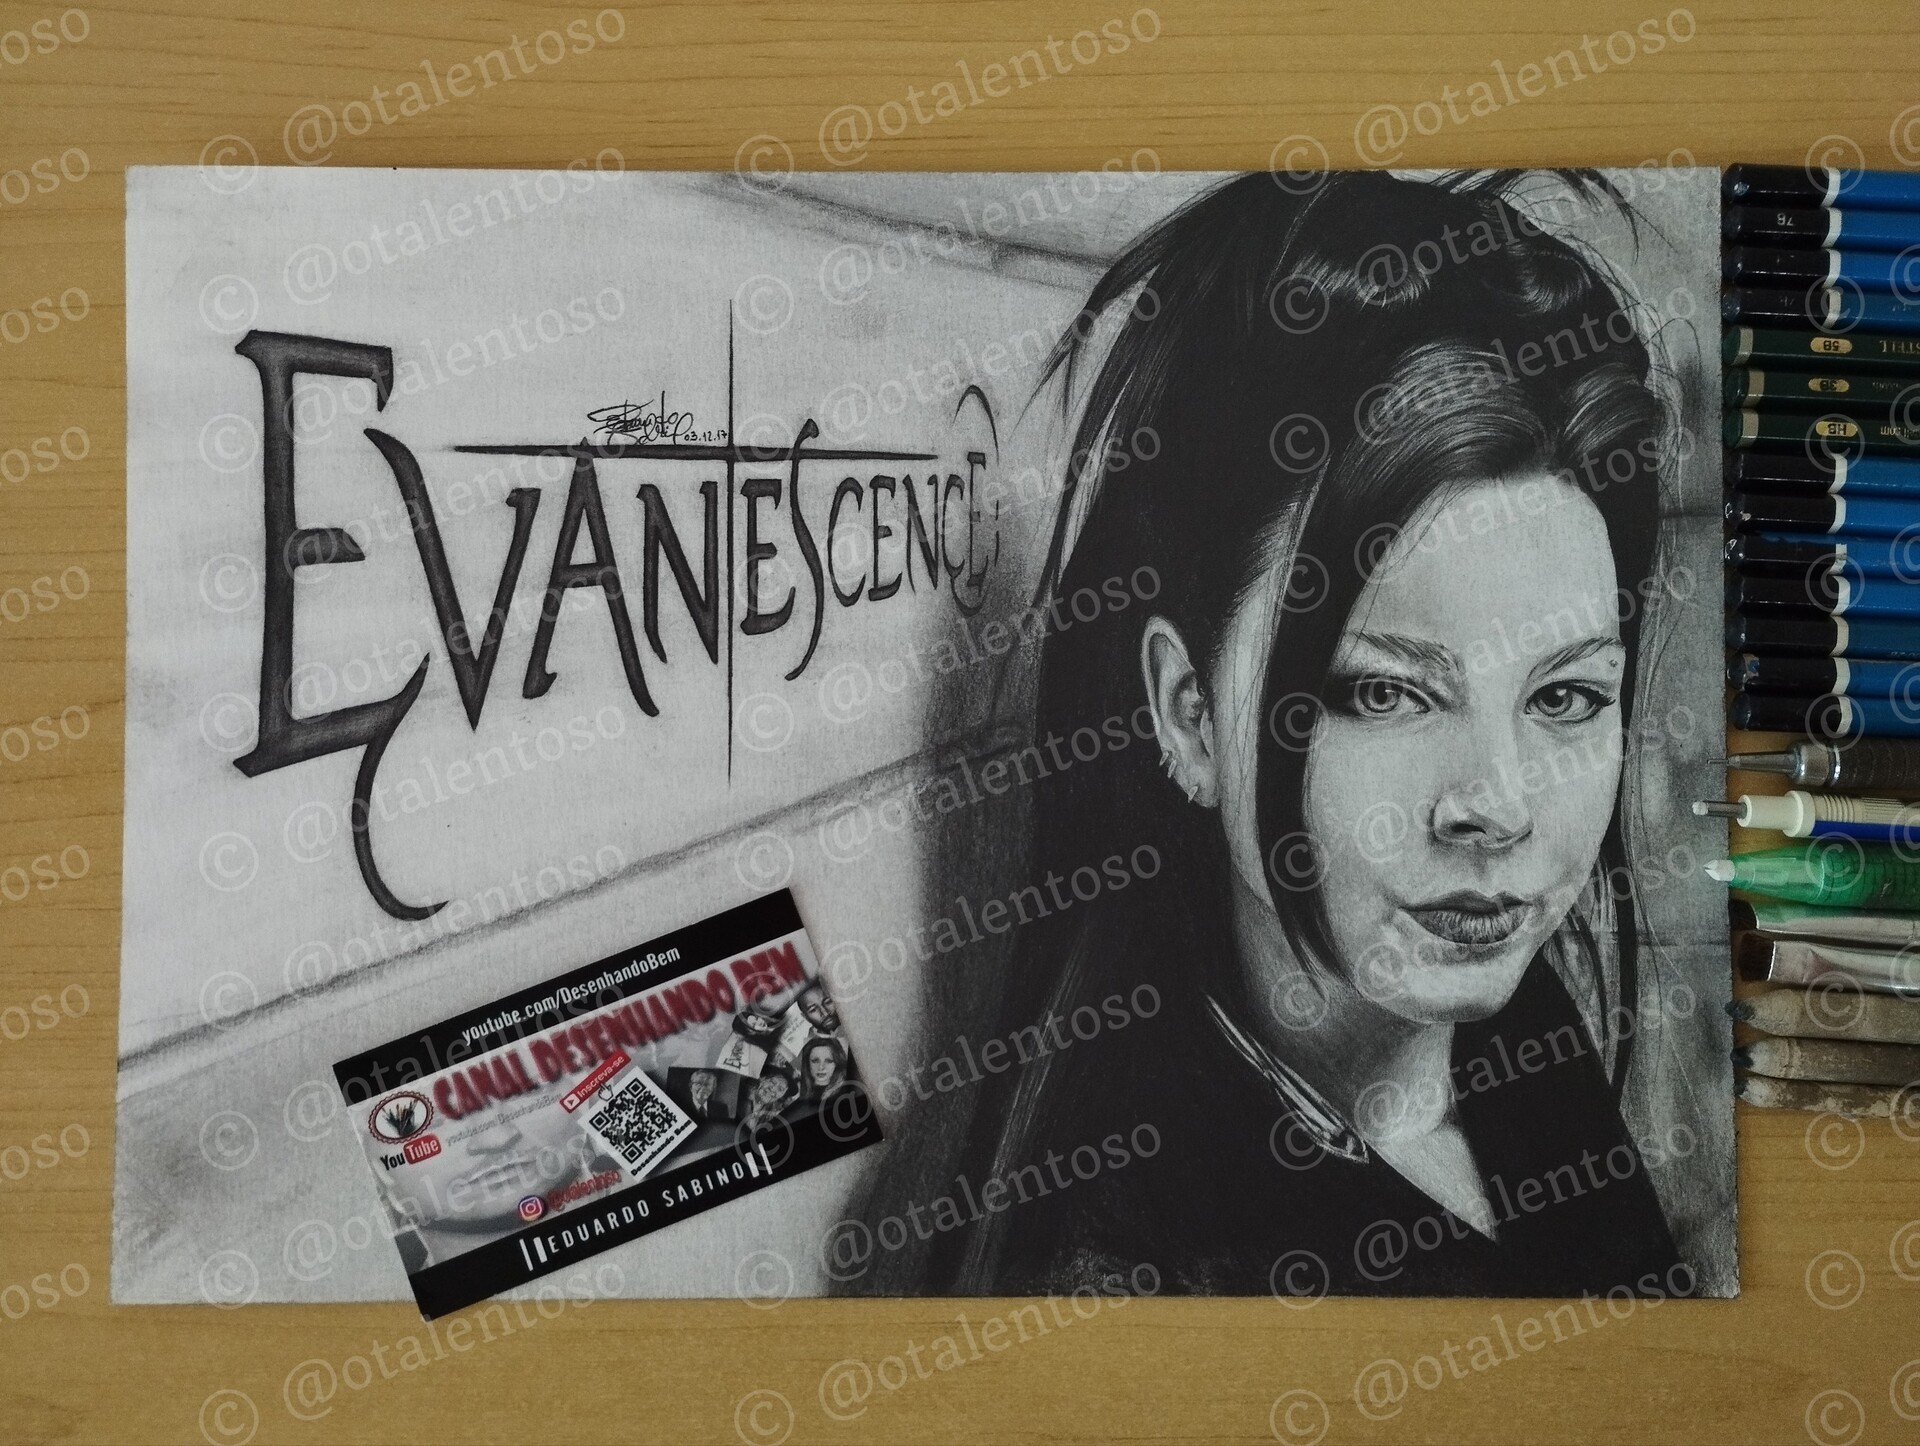 ArtStation - Evanescence